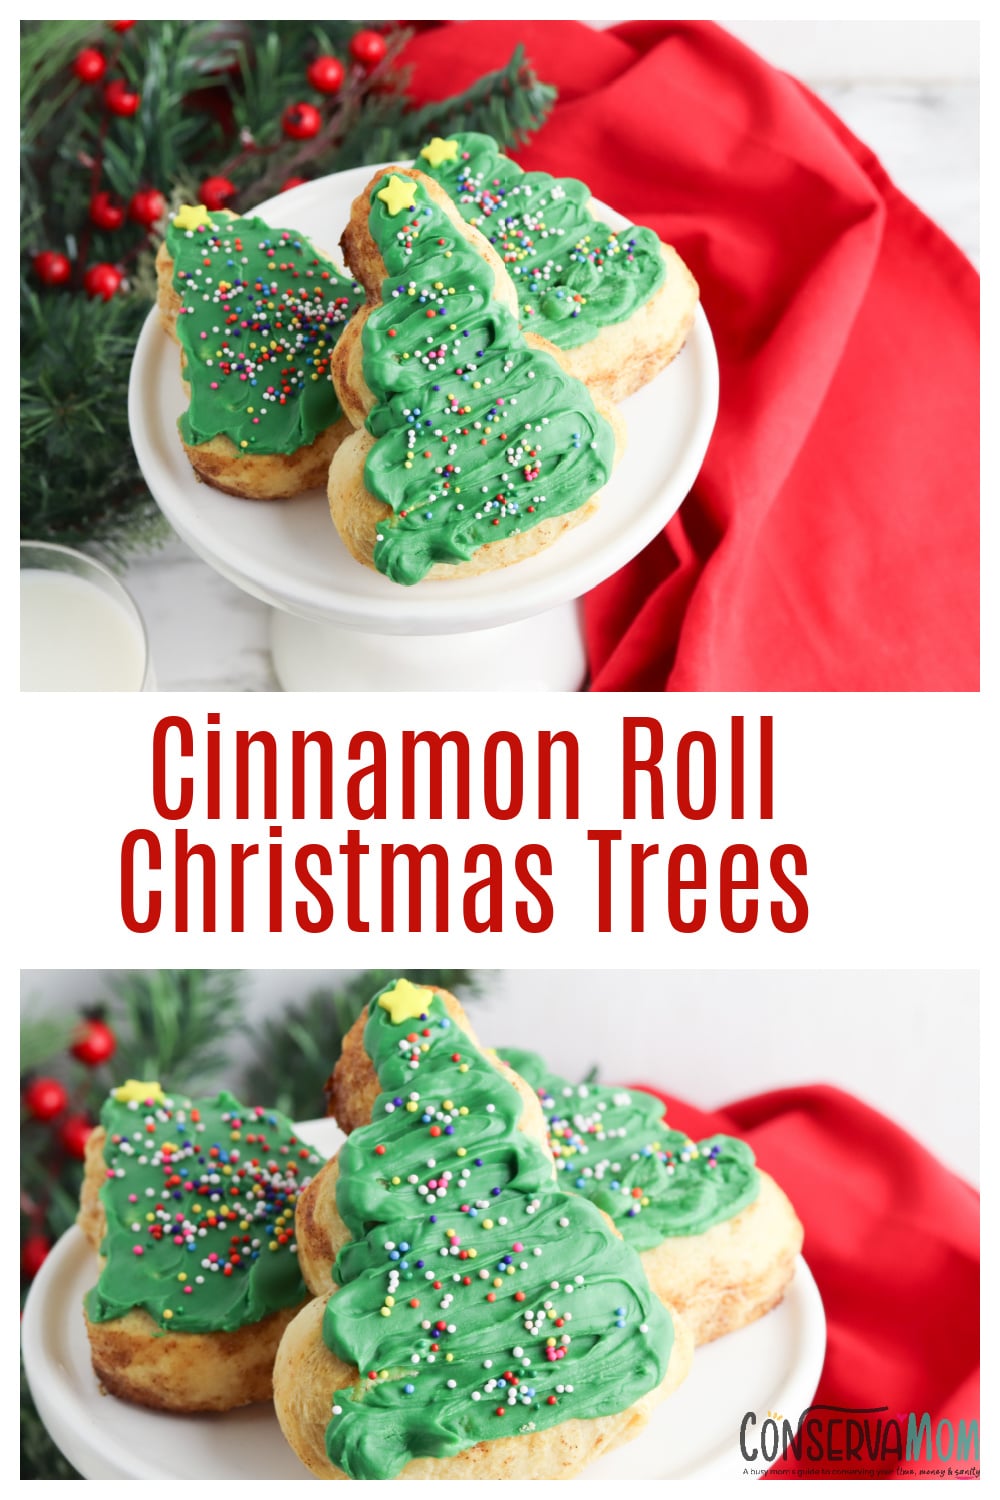 Cinnamon Roll Christmas Trees